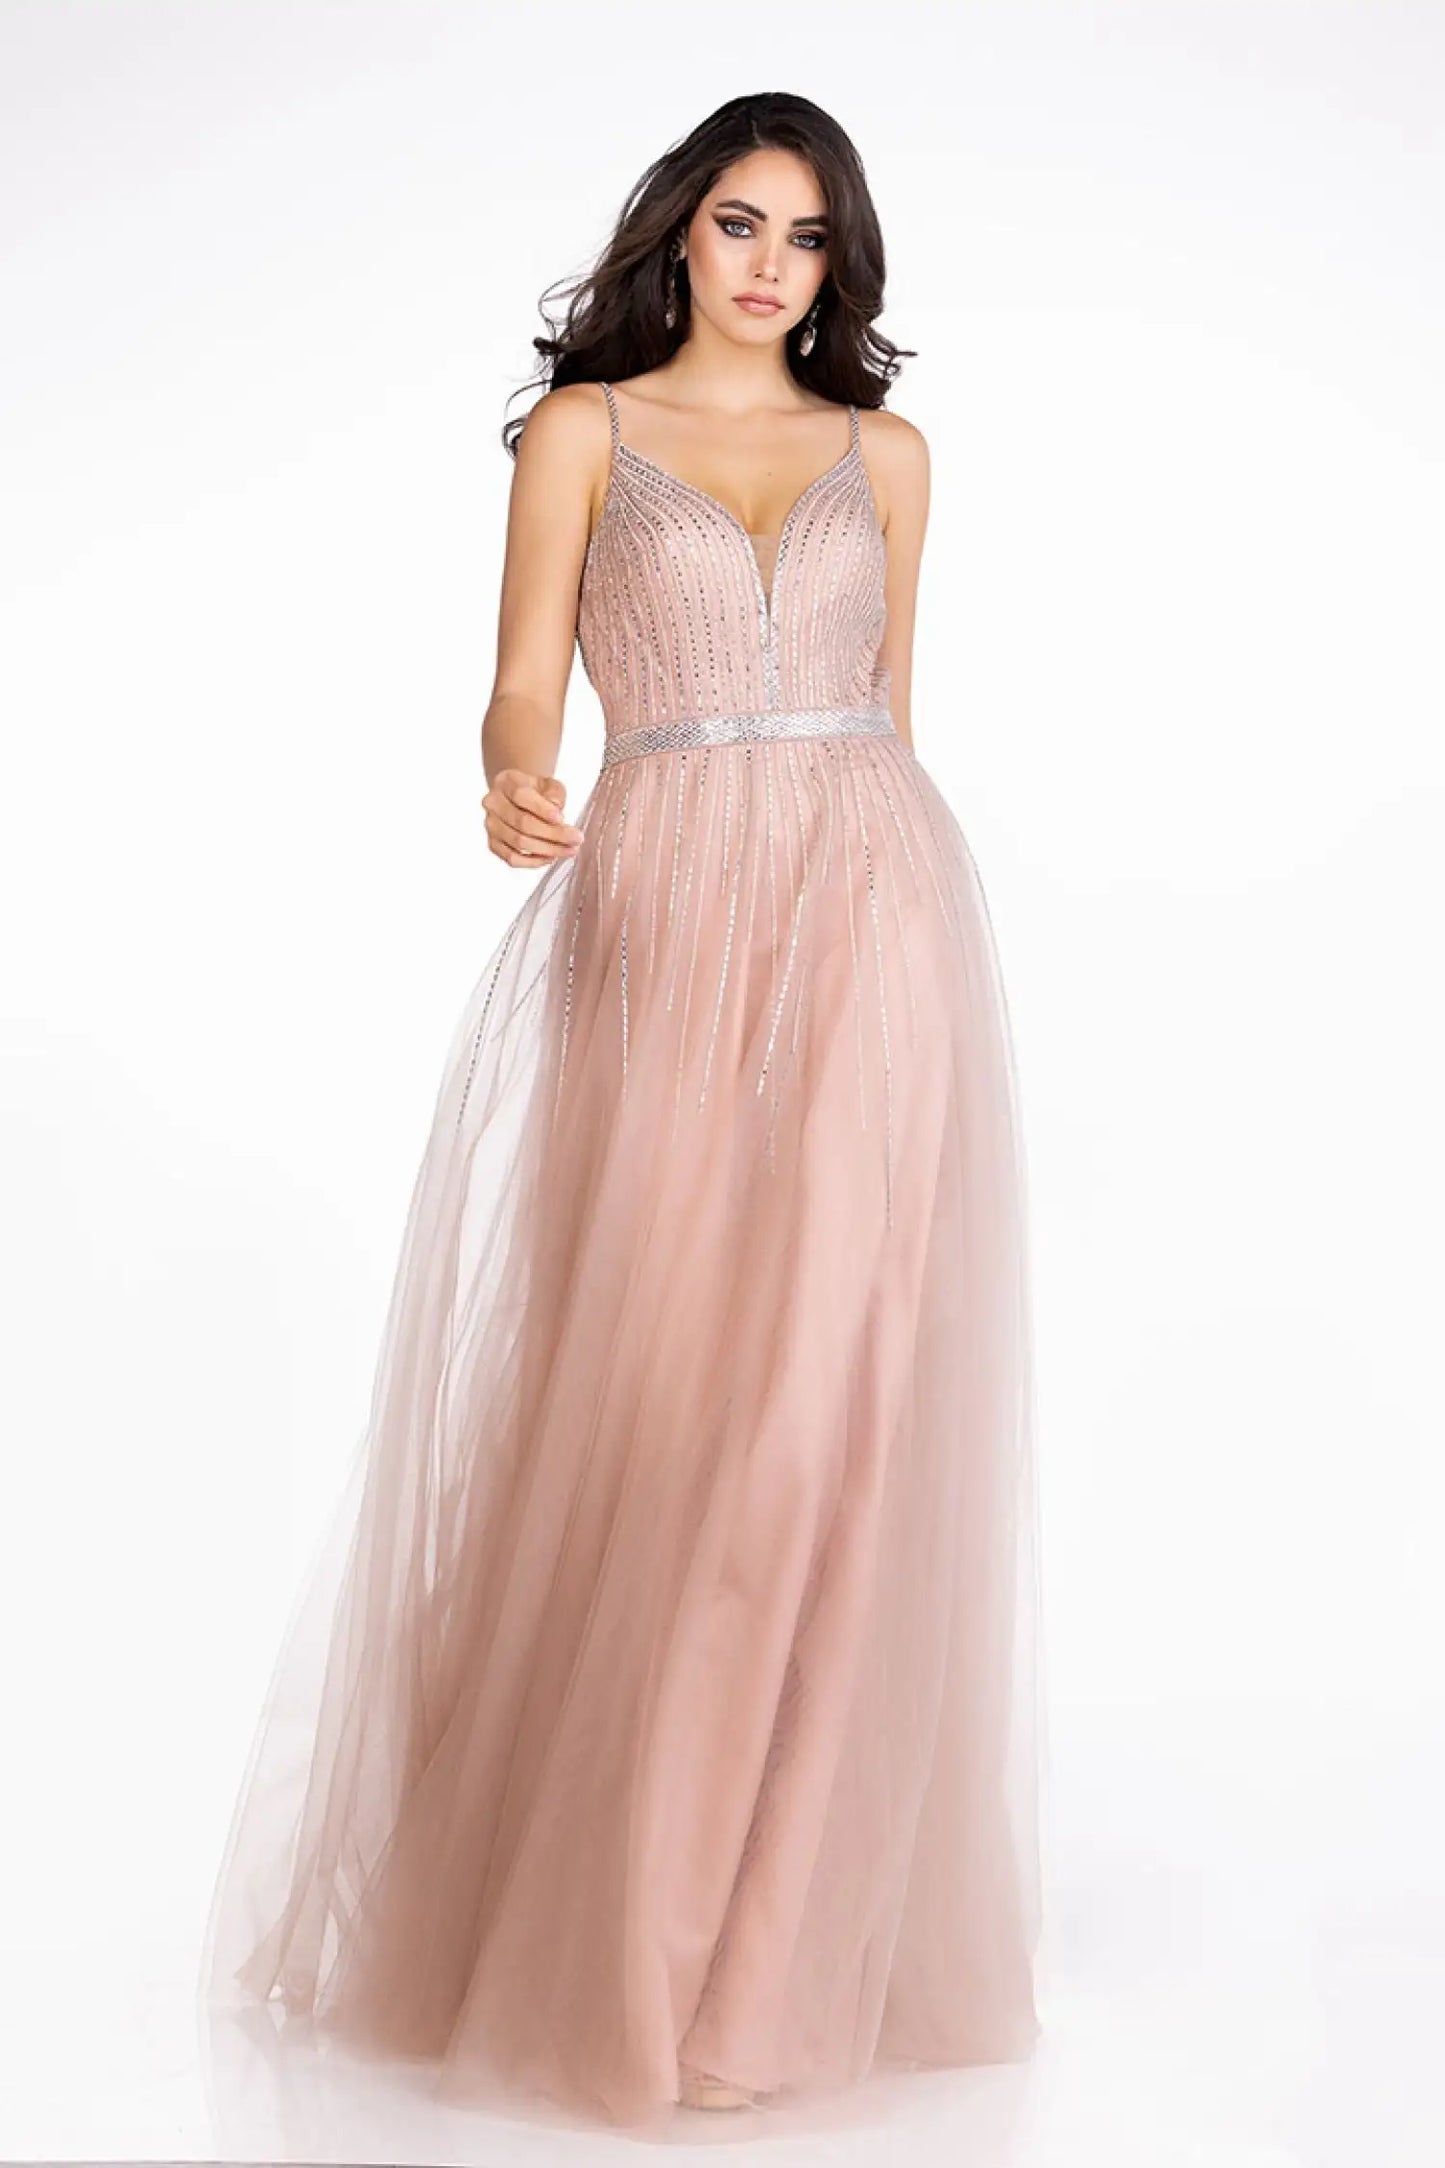 Abby Paris 90083 Size 0 Blush Long A Line Shimmer v neck Backless Prom Dress Embellished Formal Gown